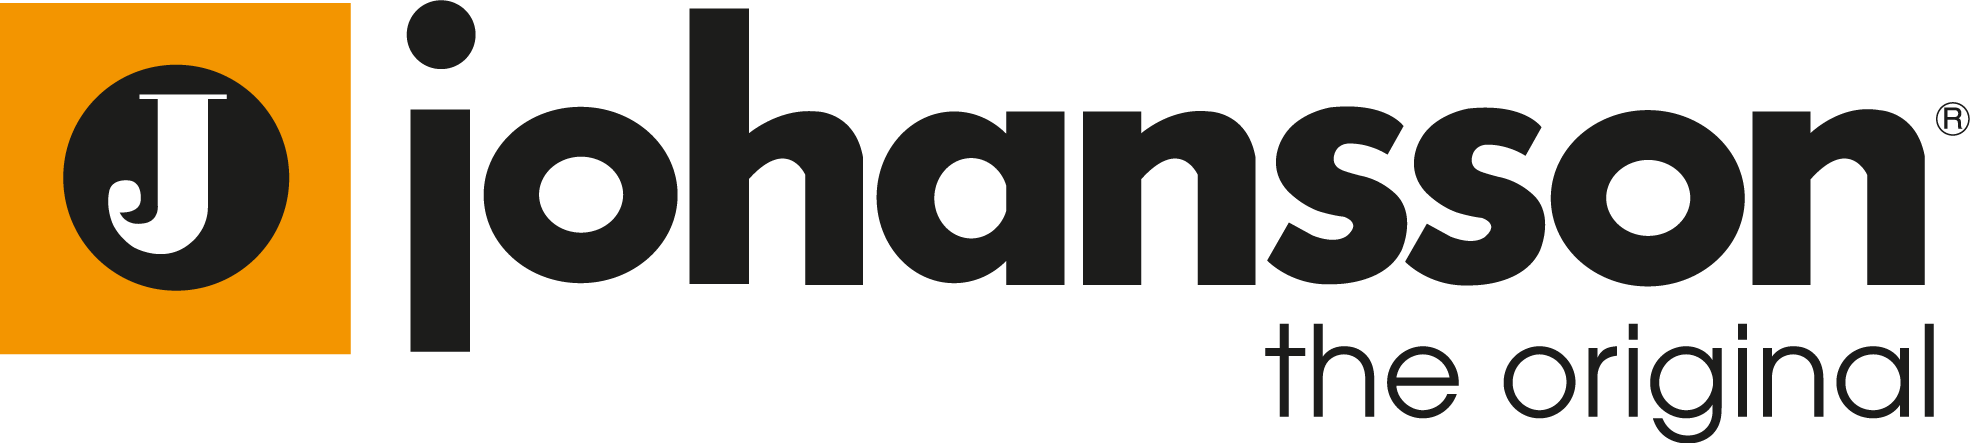 Johansson_logo